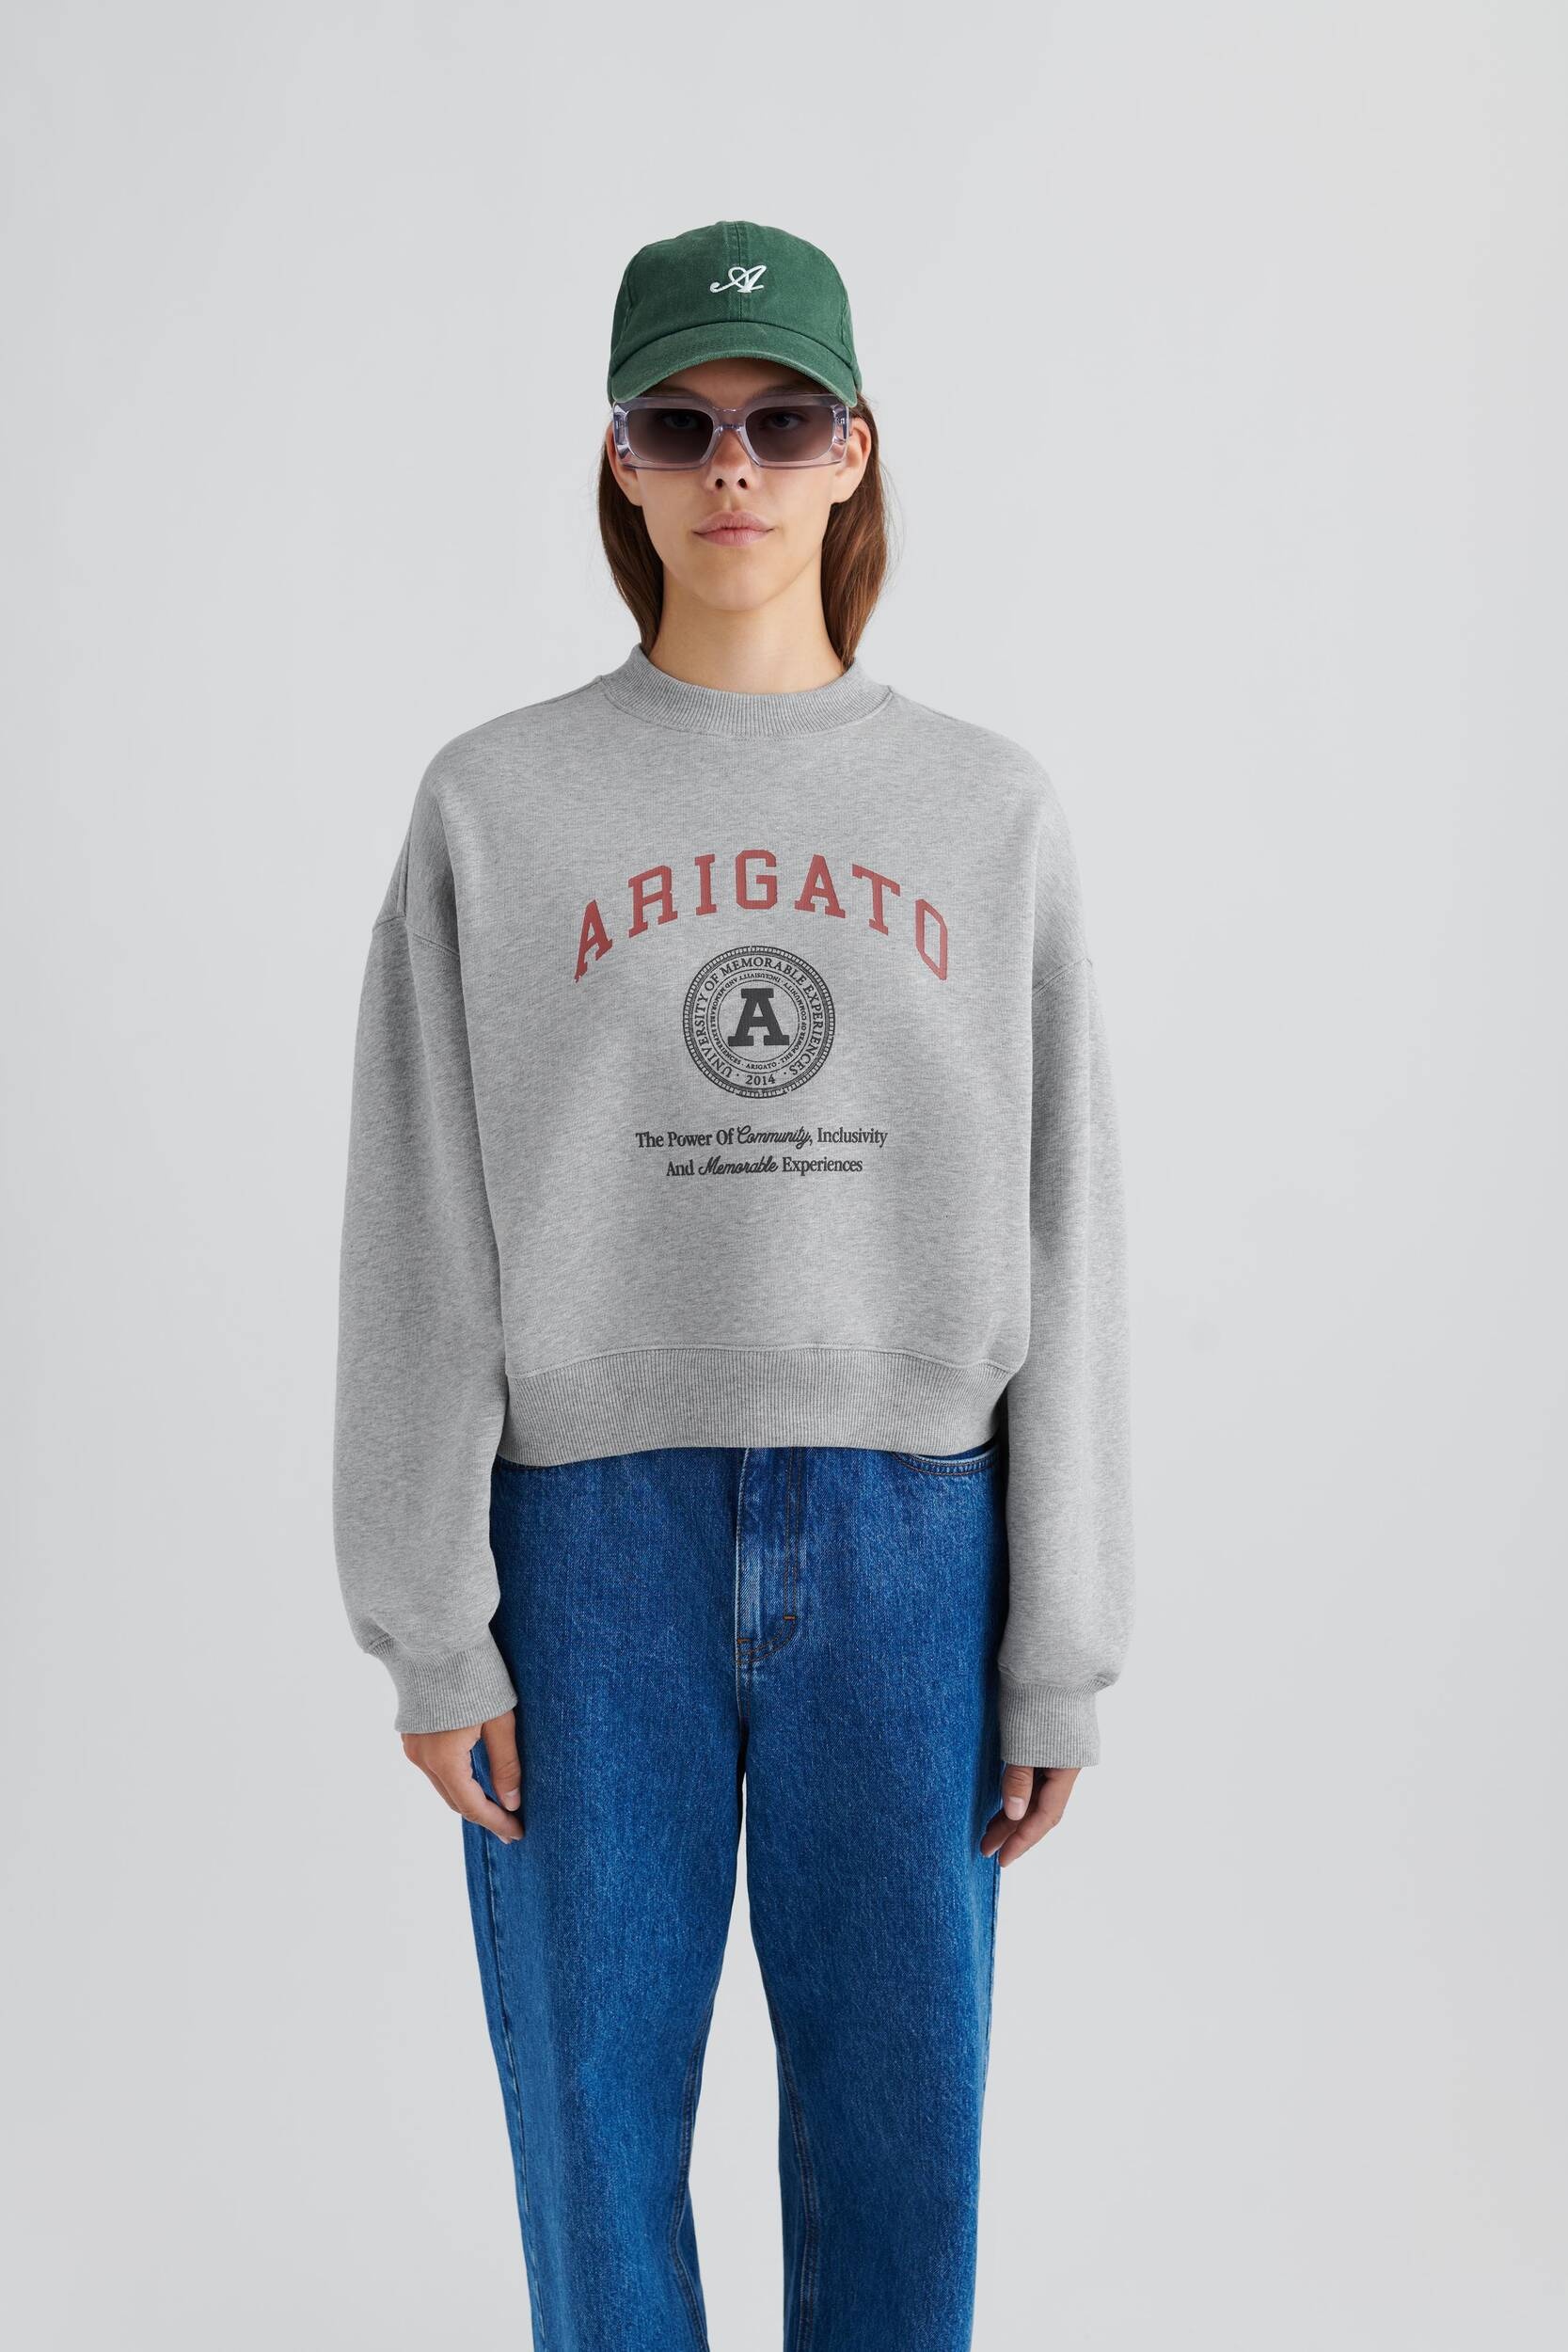 Arigato University Sweatshirt - 2